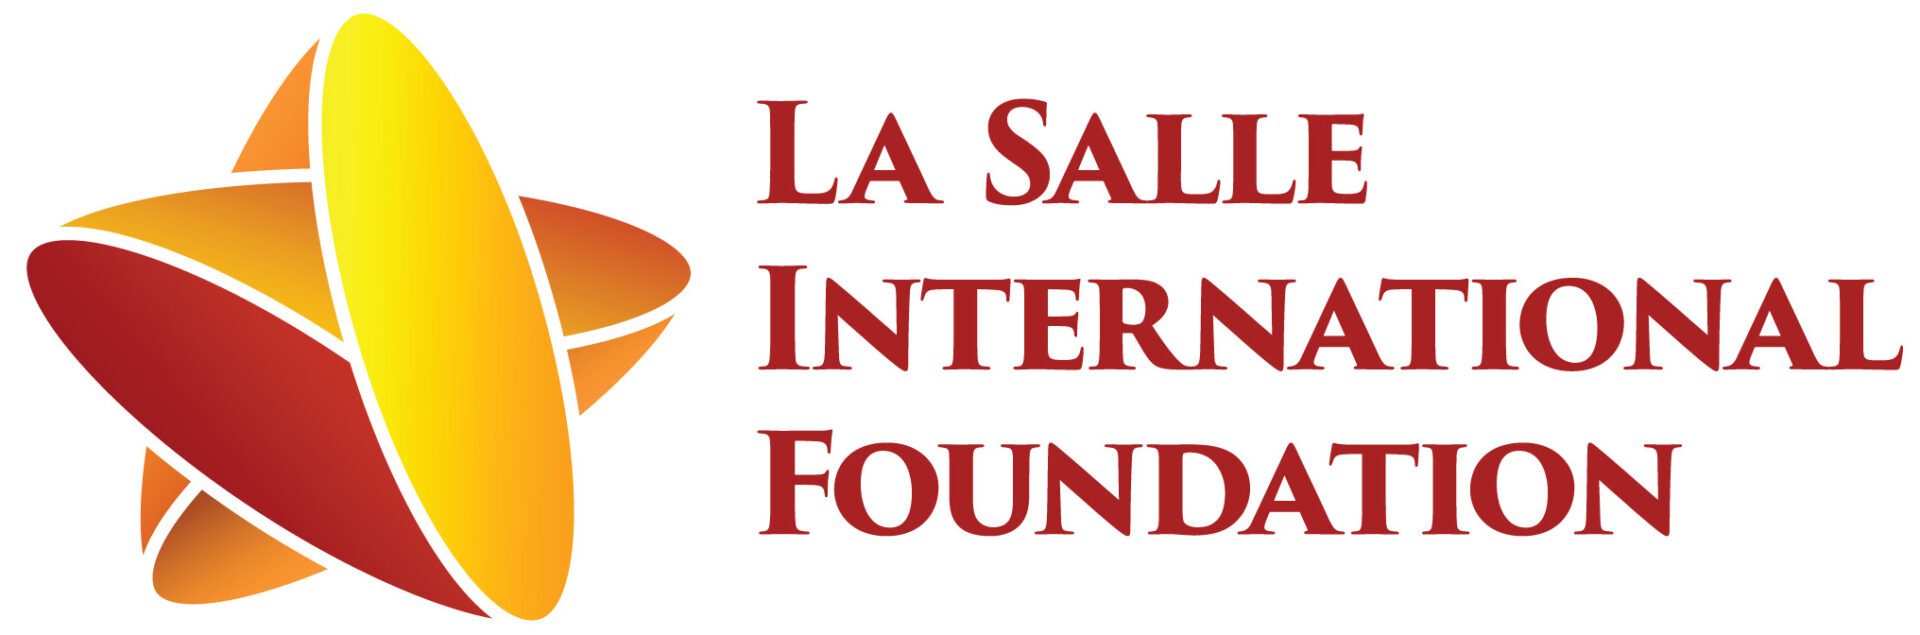 La Salle International Foundation, Inc